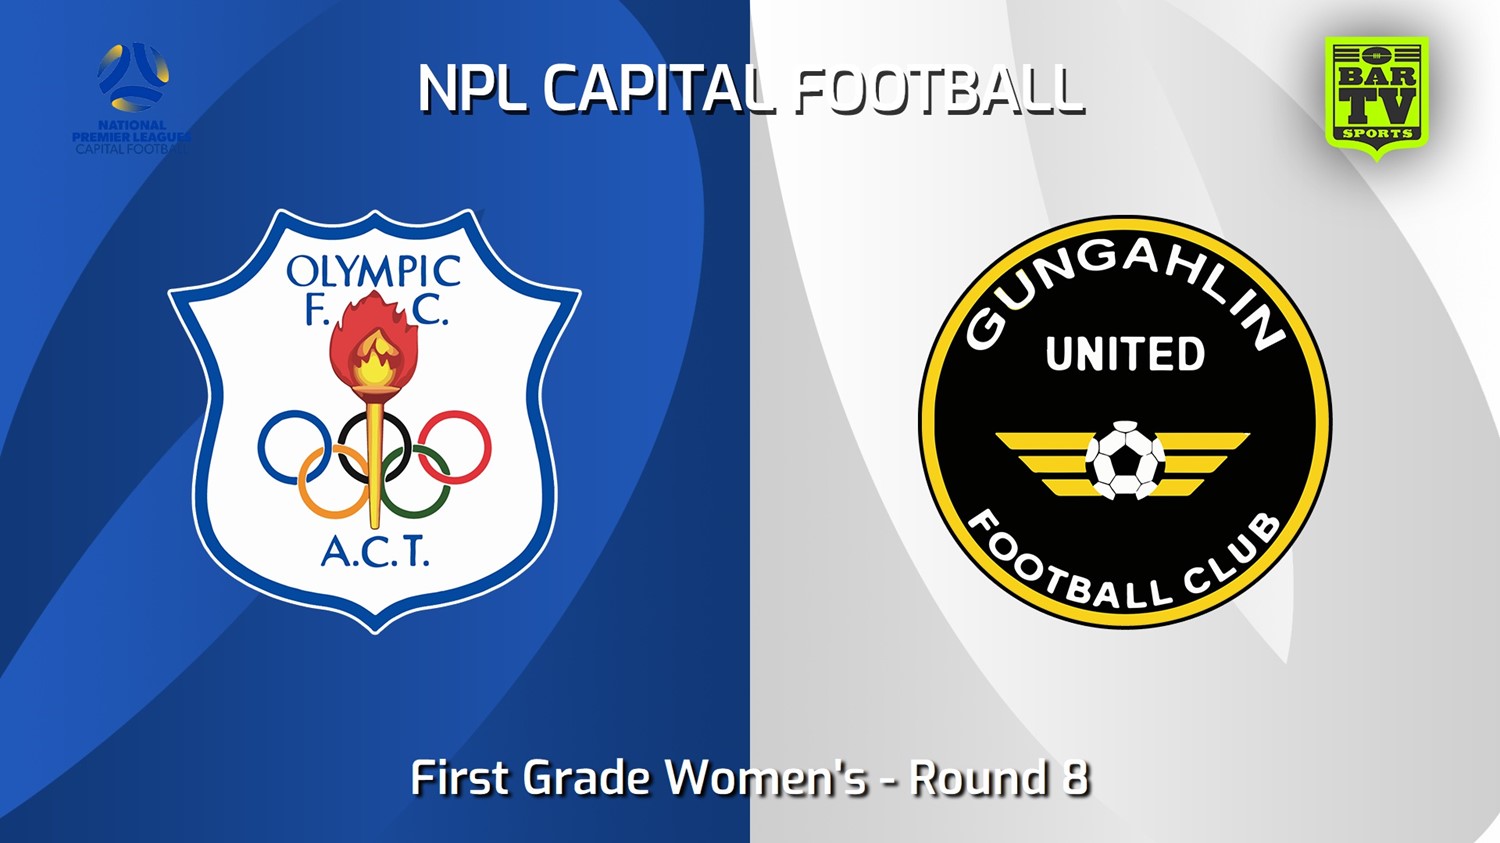 240526-video-Capital Womens Round 8 - Canberra Olympic FC W v Gungahlin United FC W Minigame Slate Image